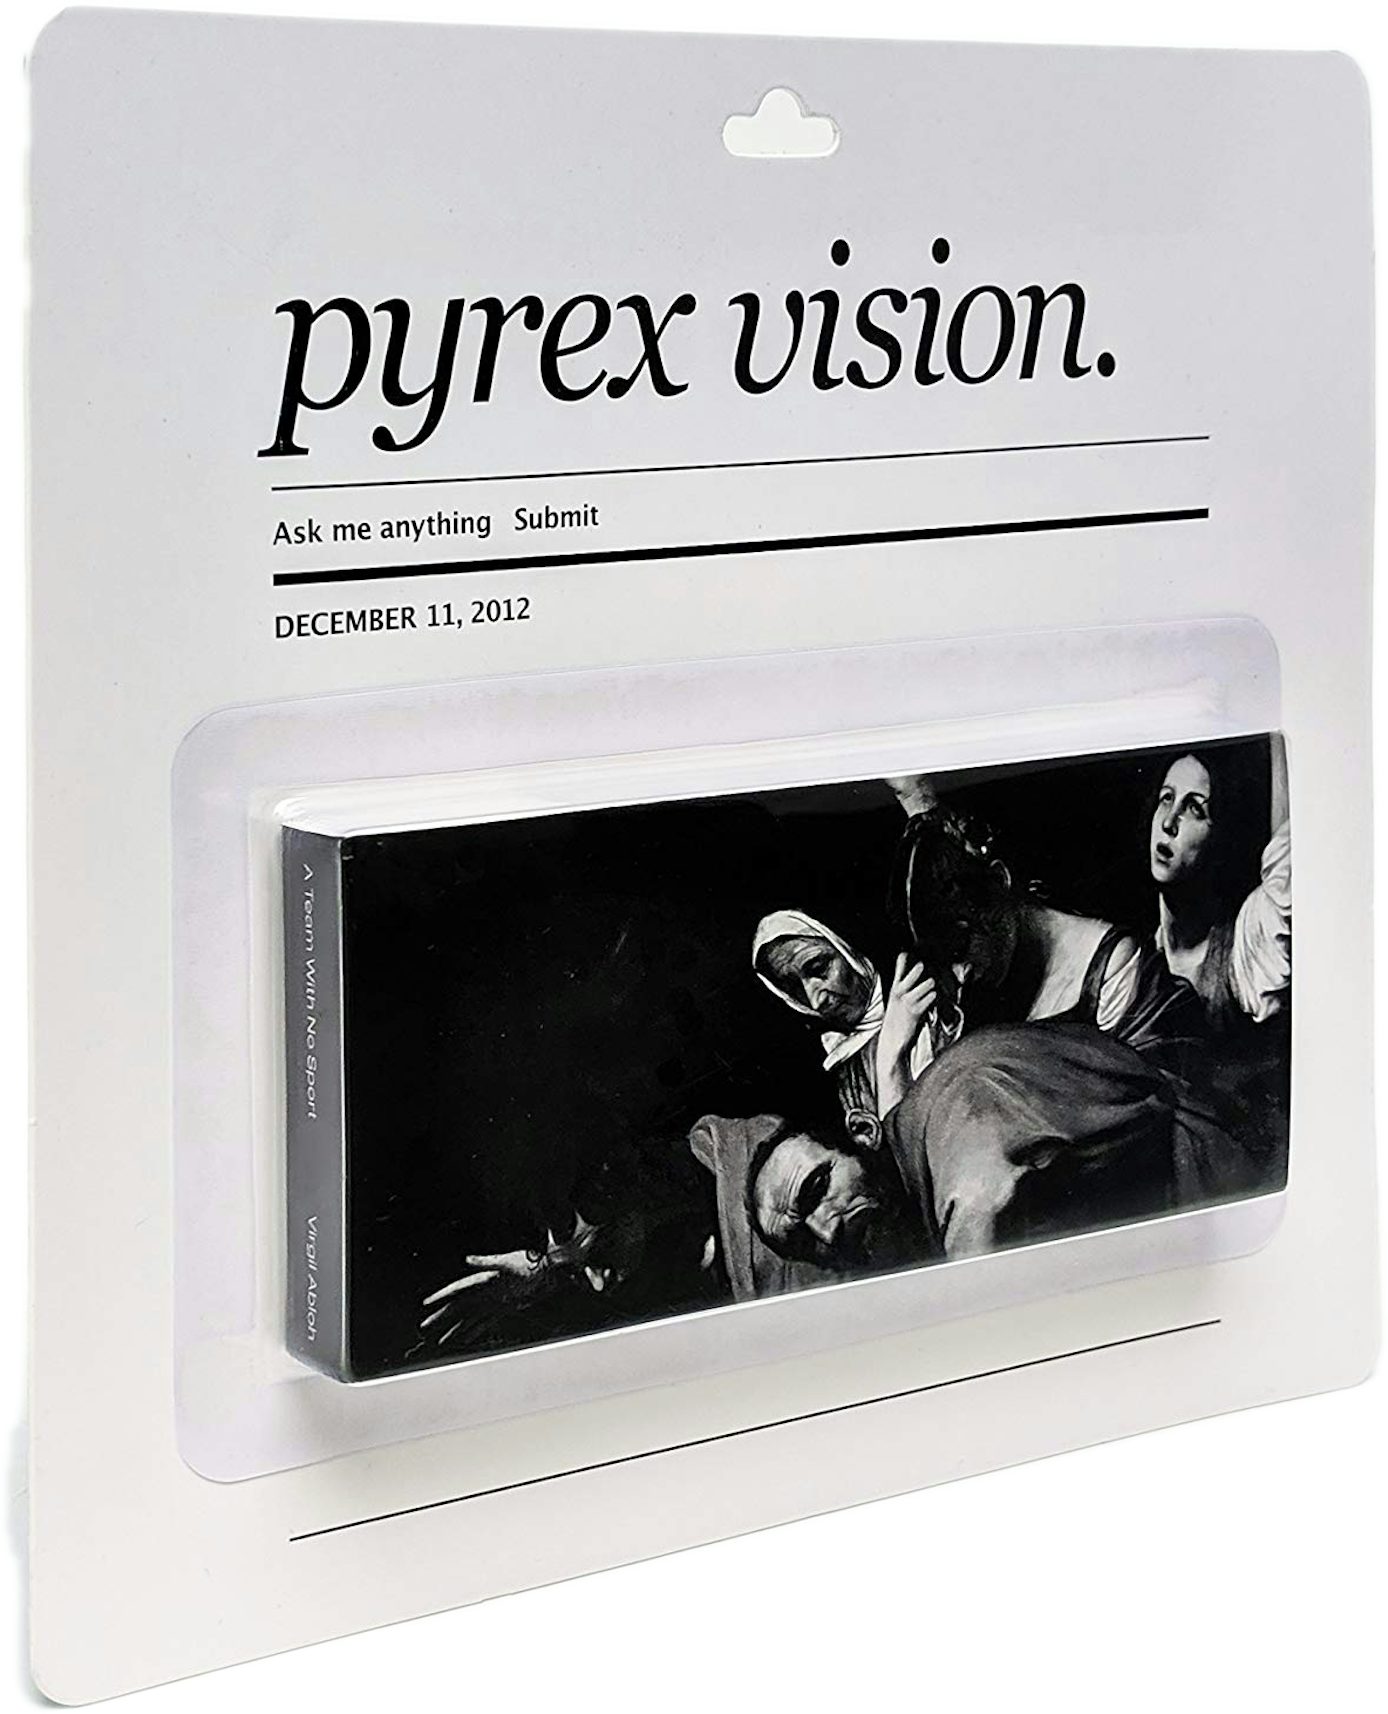 Virgil Abloh's Pyrex Vision Brand Is Still Alive